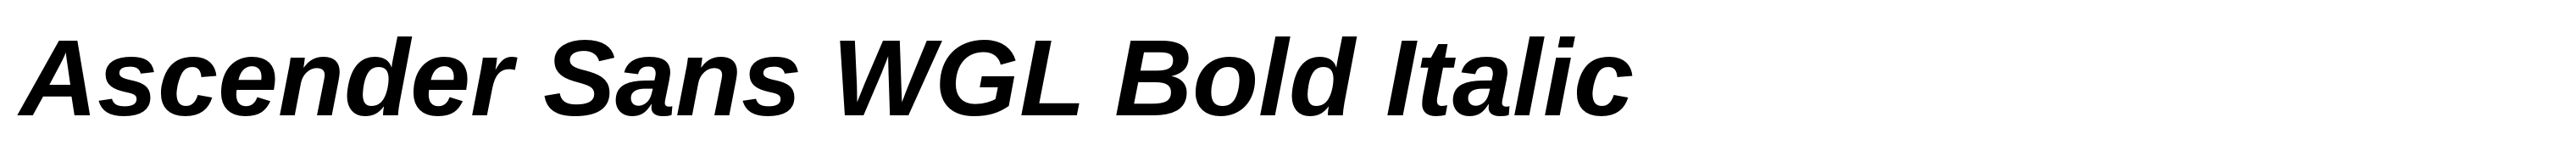 Ascender Sans WGL Bold Italic